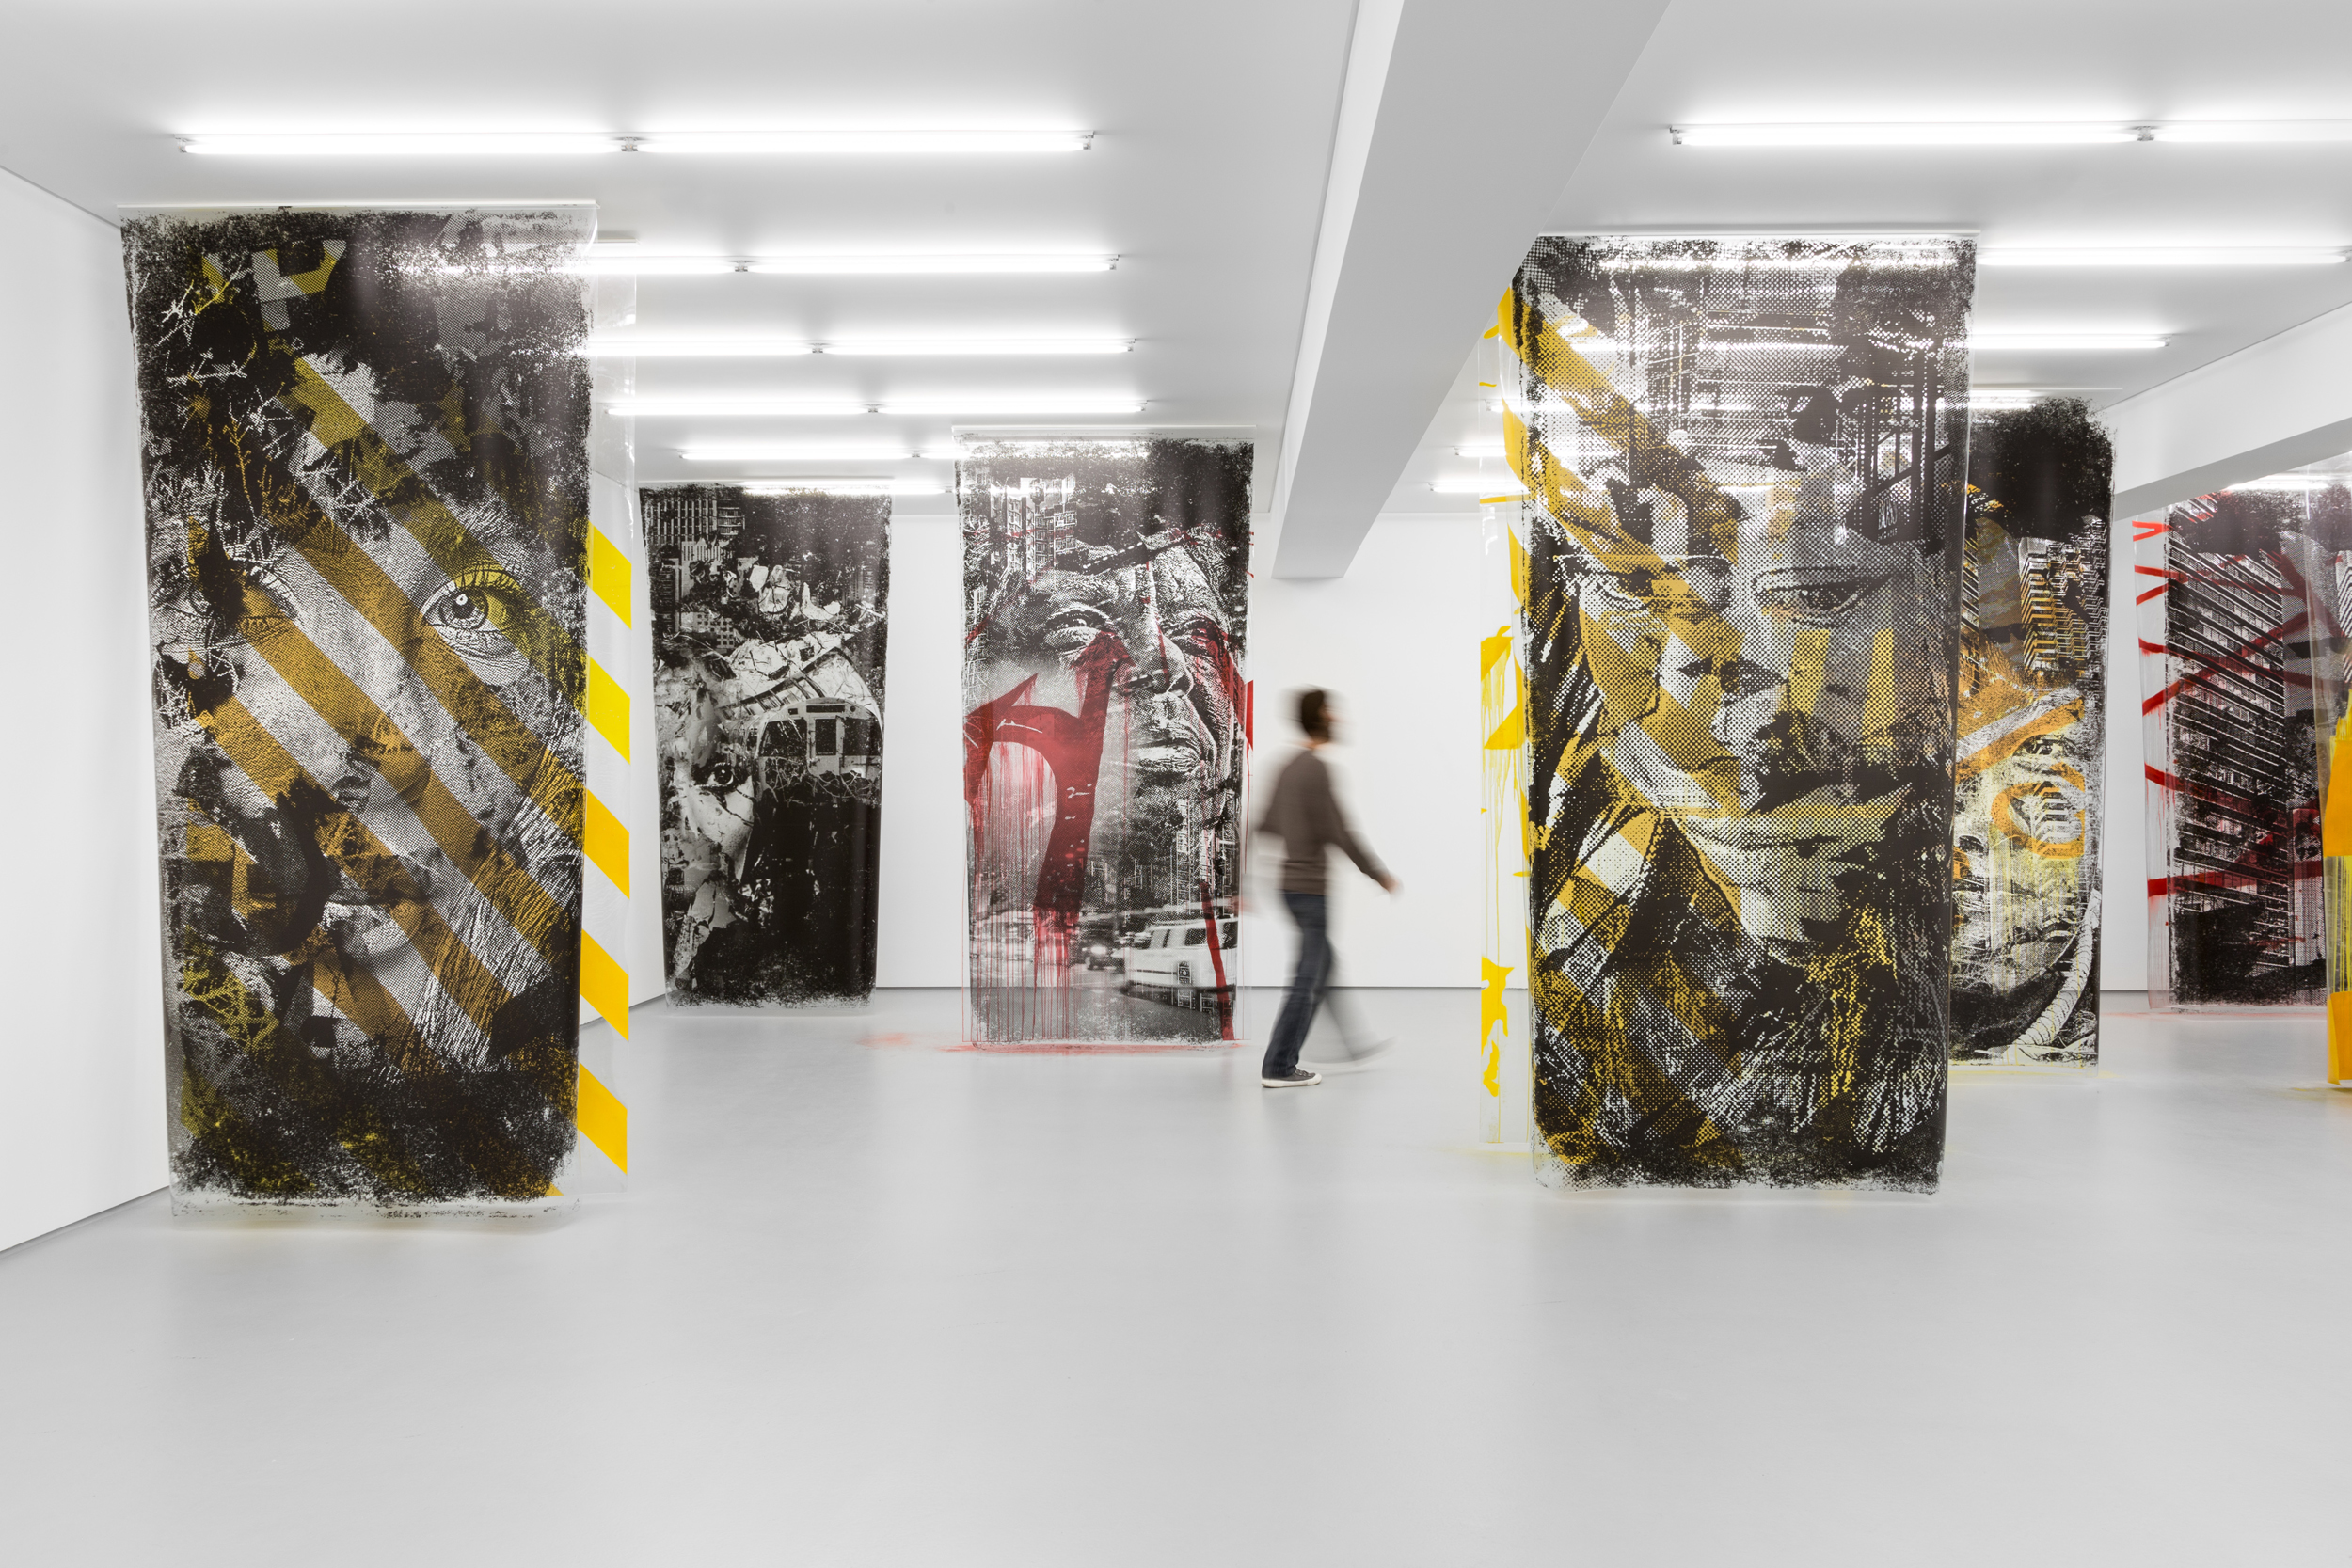 Alexandre Farto aka Vhils
Exhibition view: Intrínseco, Galeria Vera Cortês, 2018
